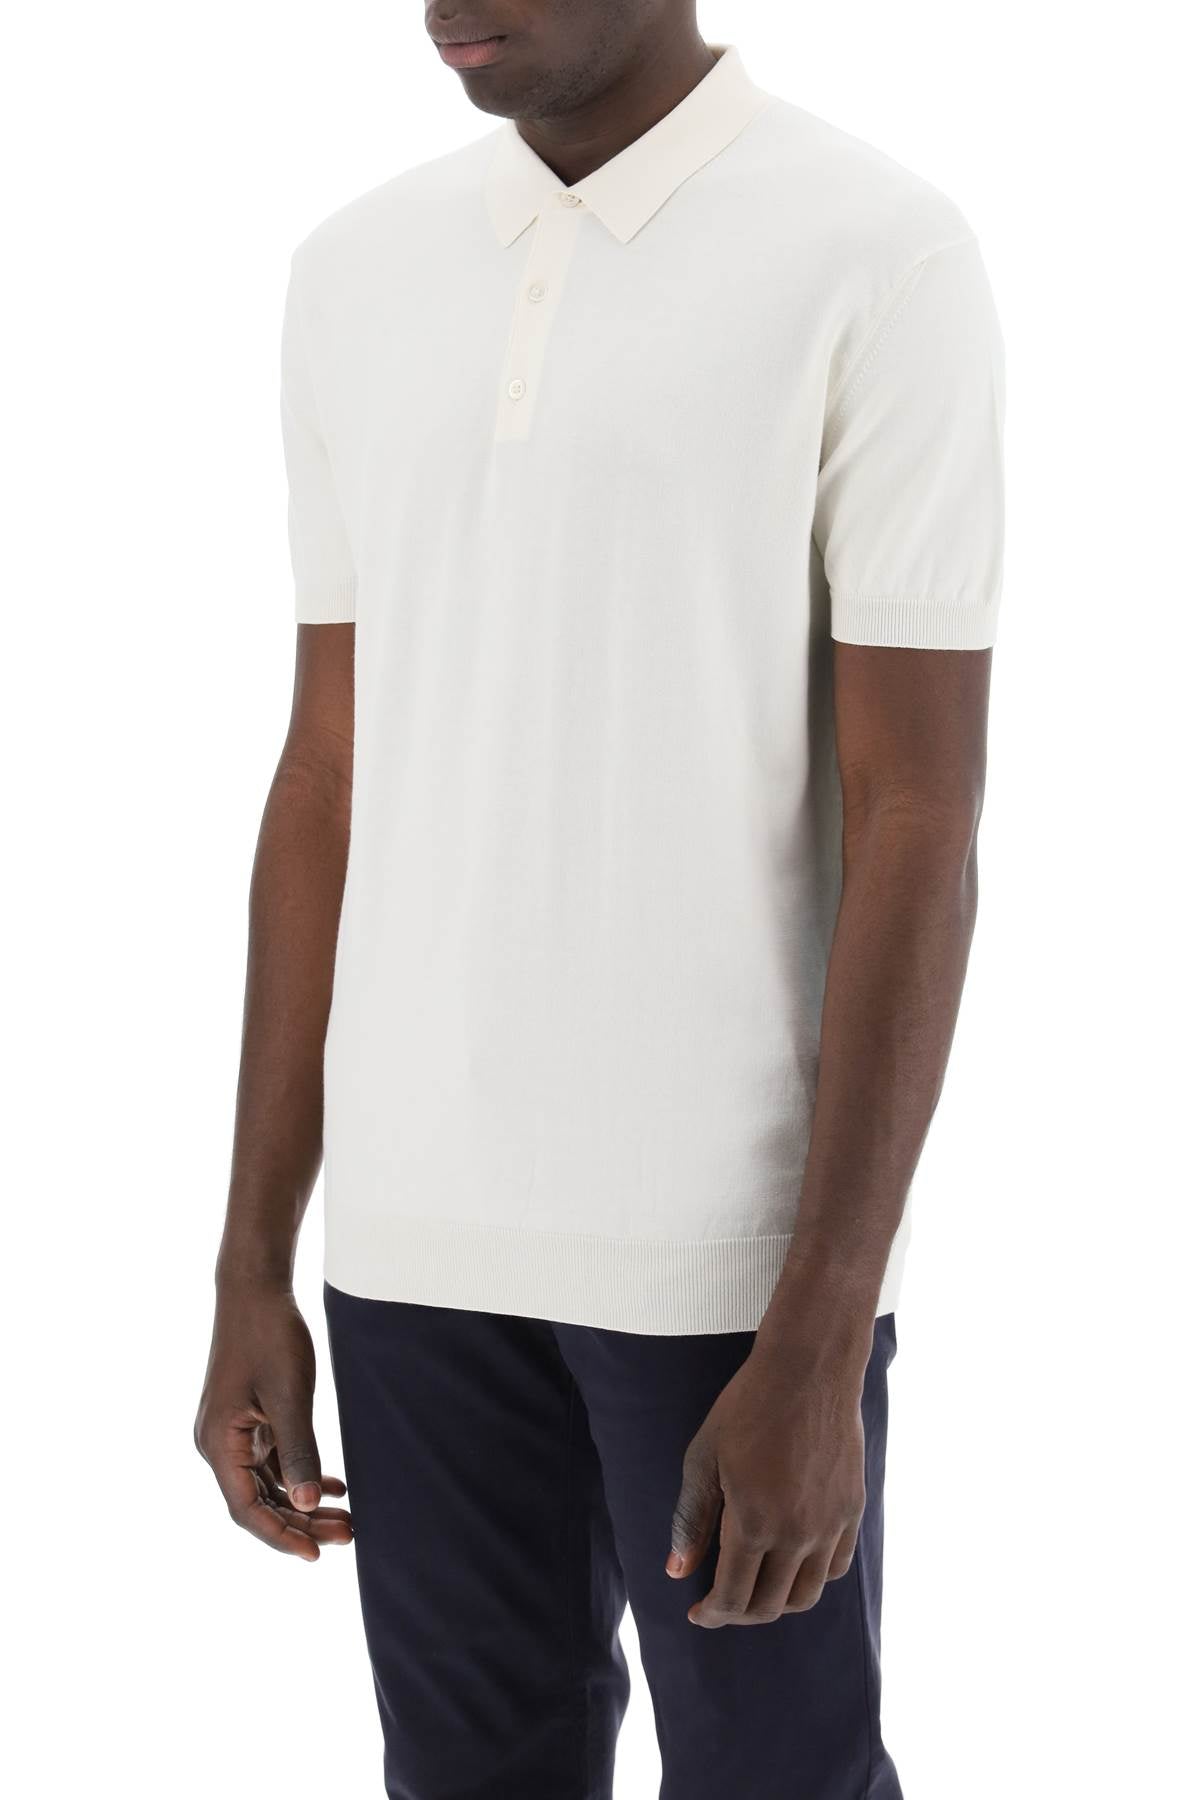 Baracuta short-sleeved cotton polo shirt for-3